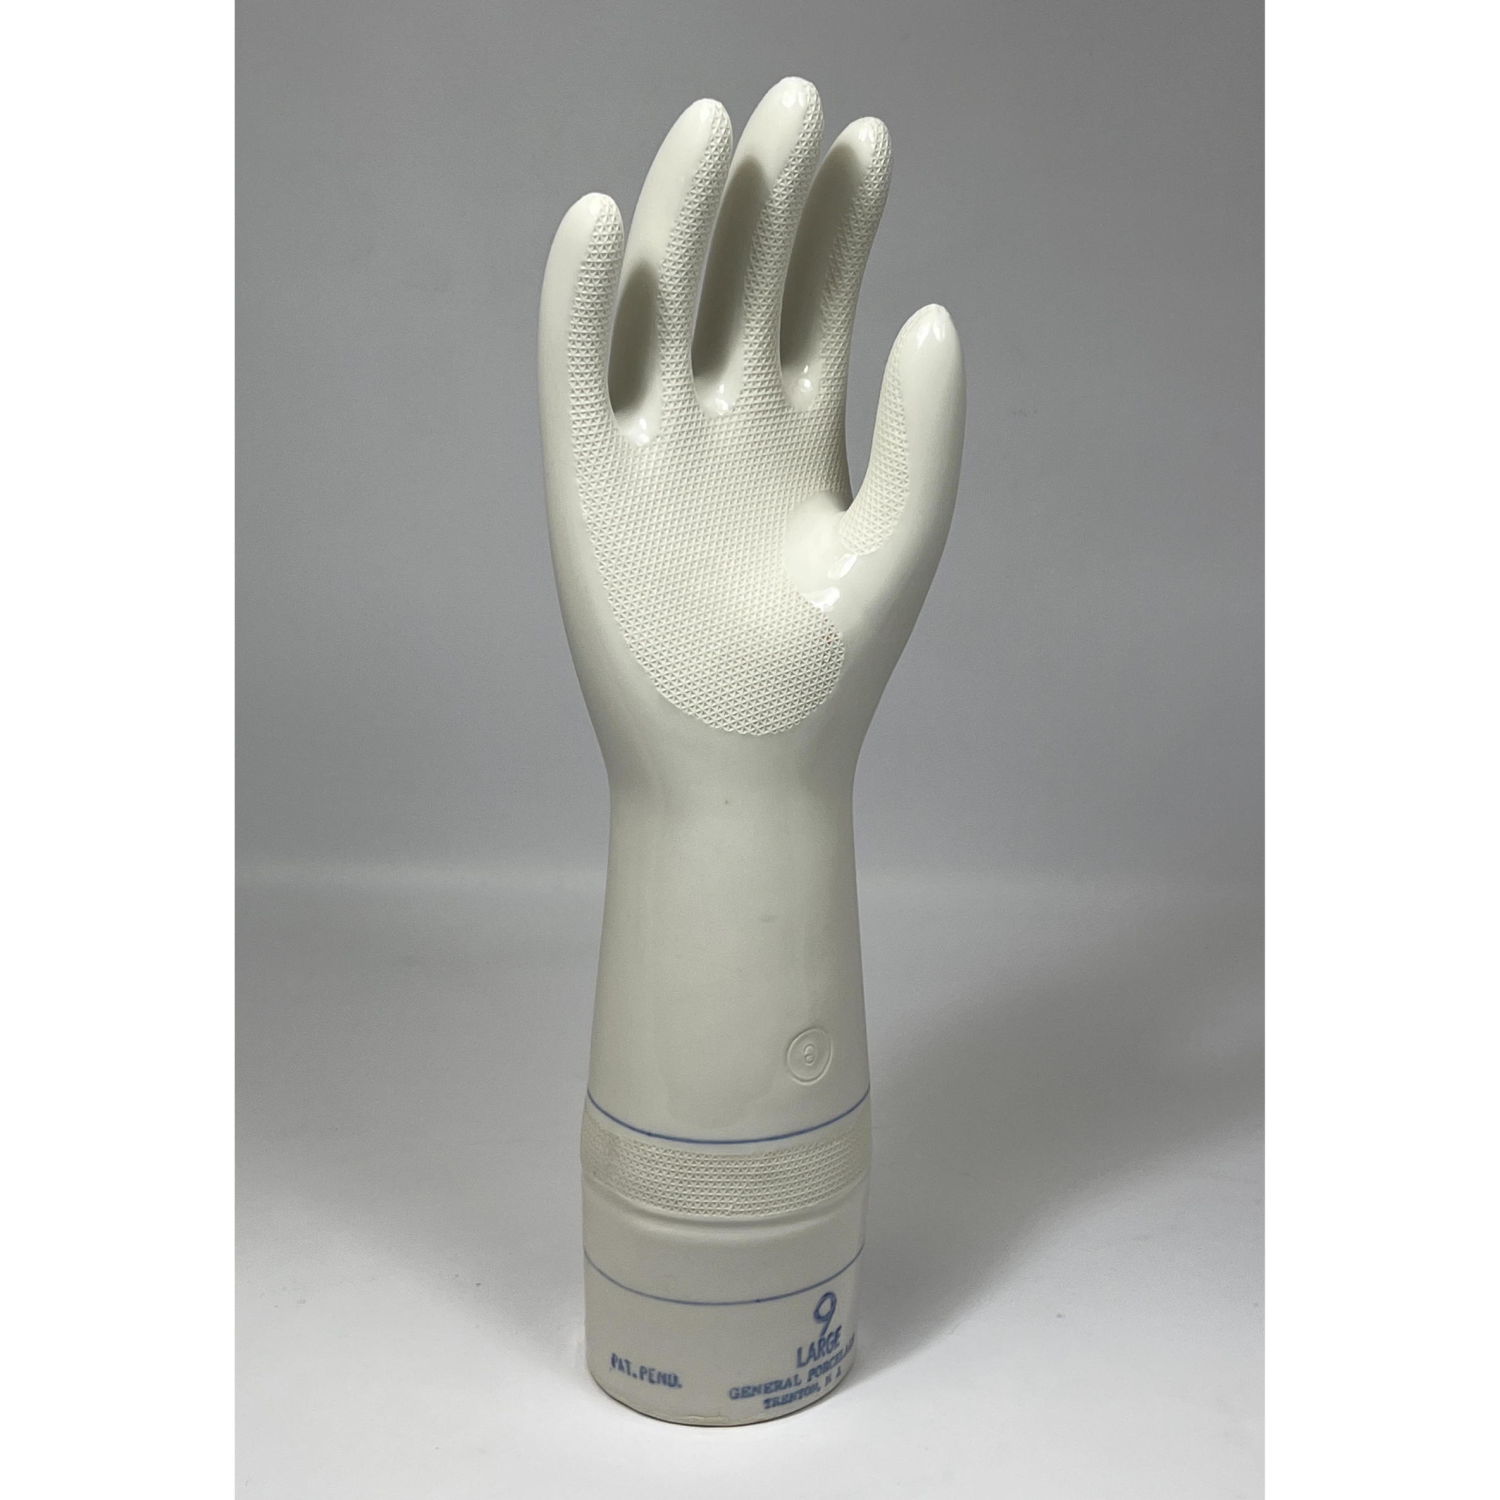 Glazed Porcelain Large Hand Glove 2fce72